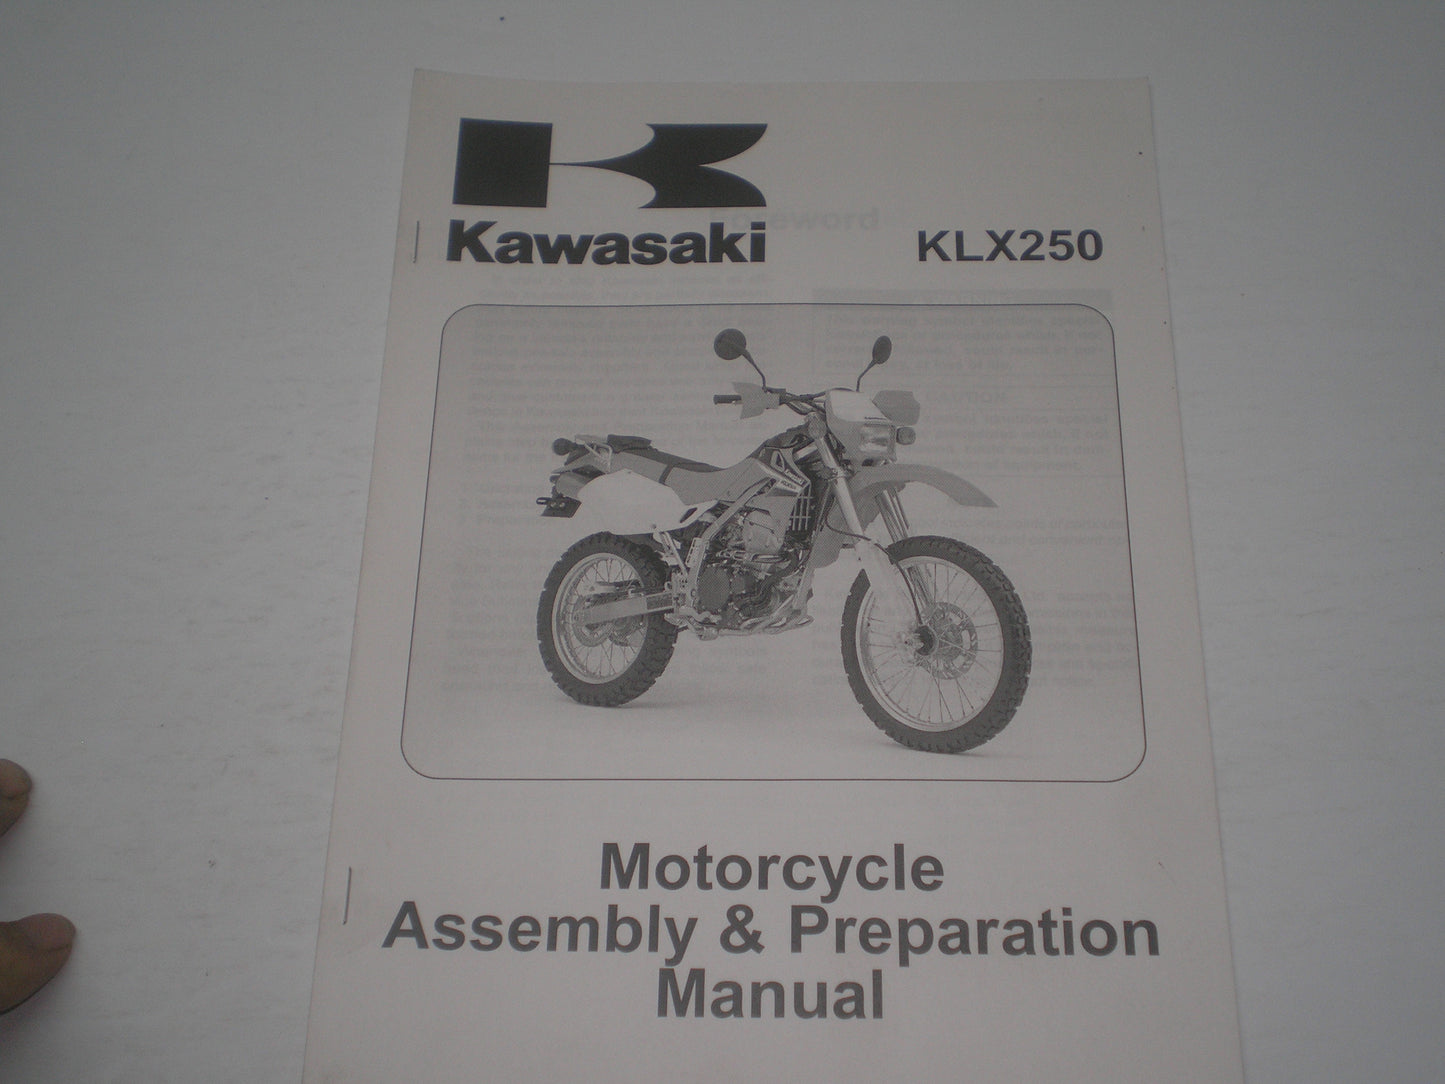 KAWASAKI KLX250 / KLX250 H6F  2006  Assembly & Preparation Manual  99931-1458-01  #1868